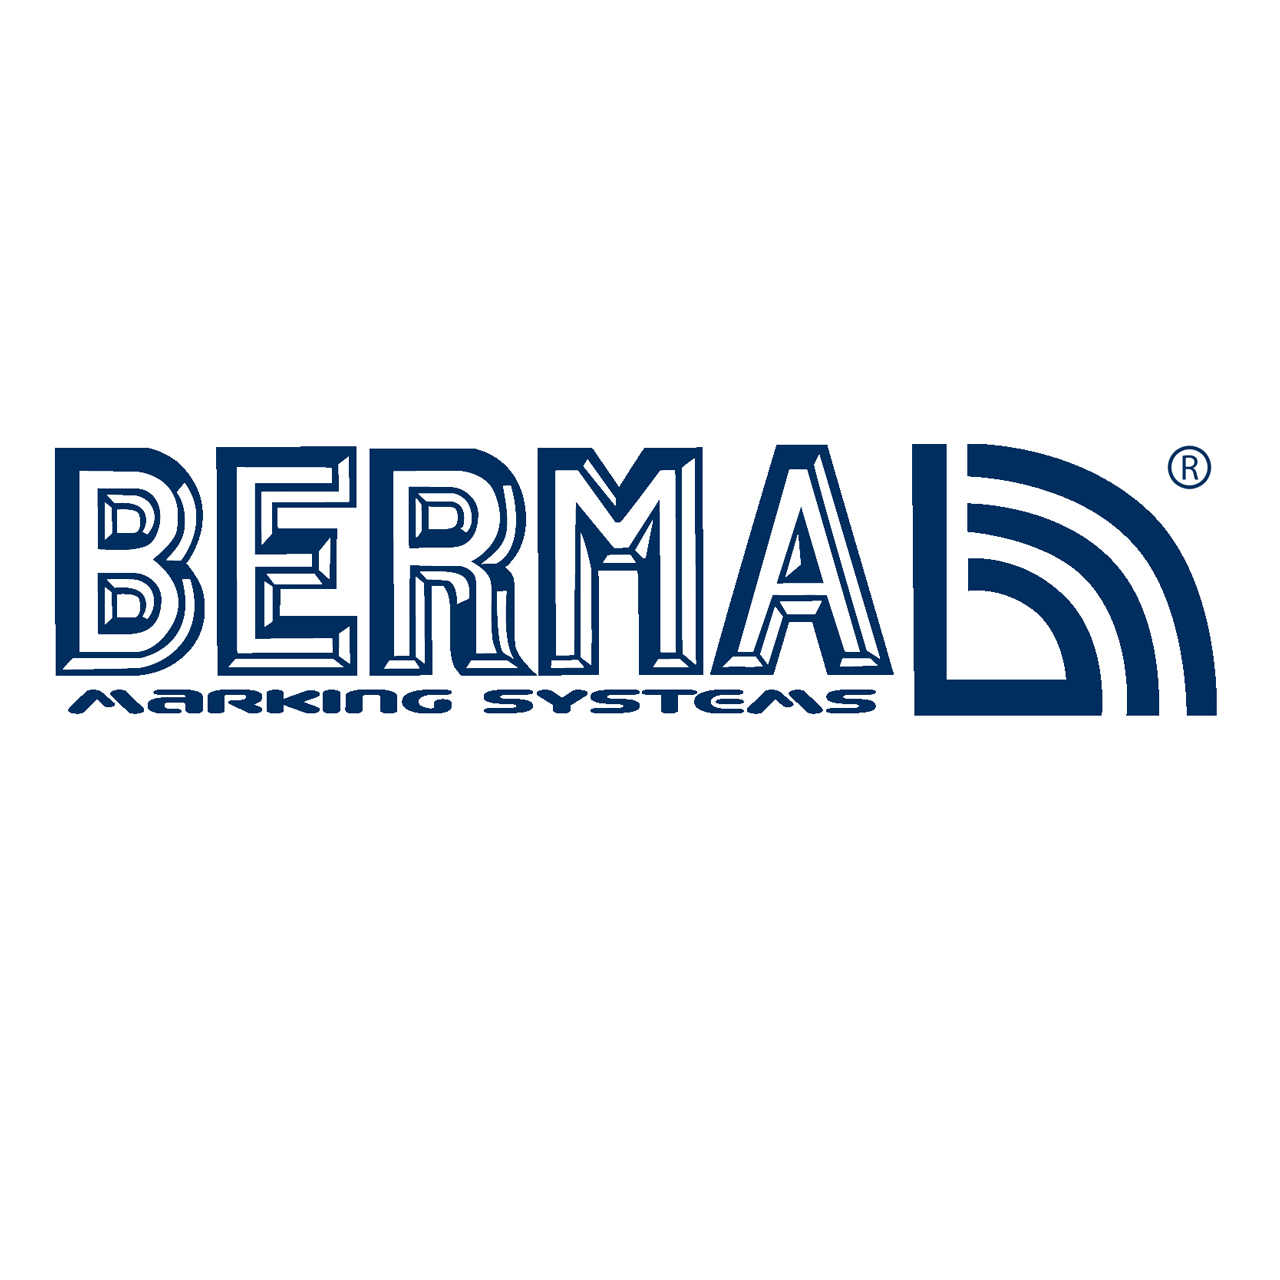 Berma official logo adapted